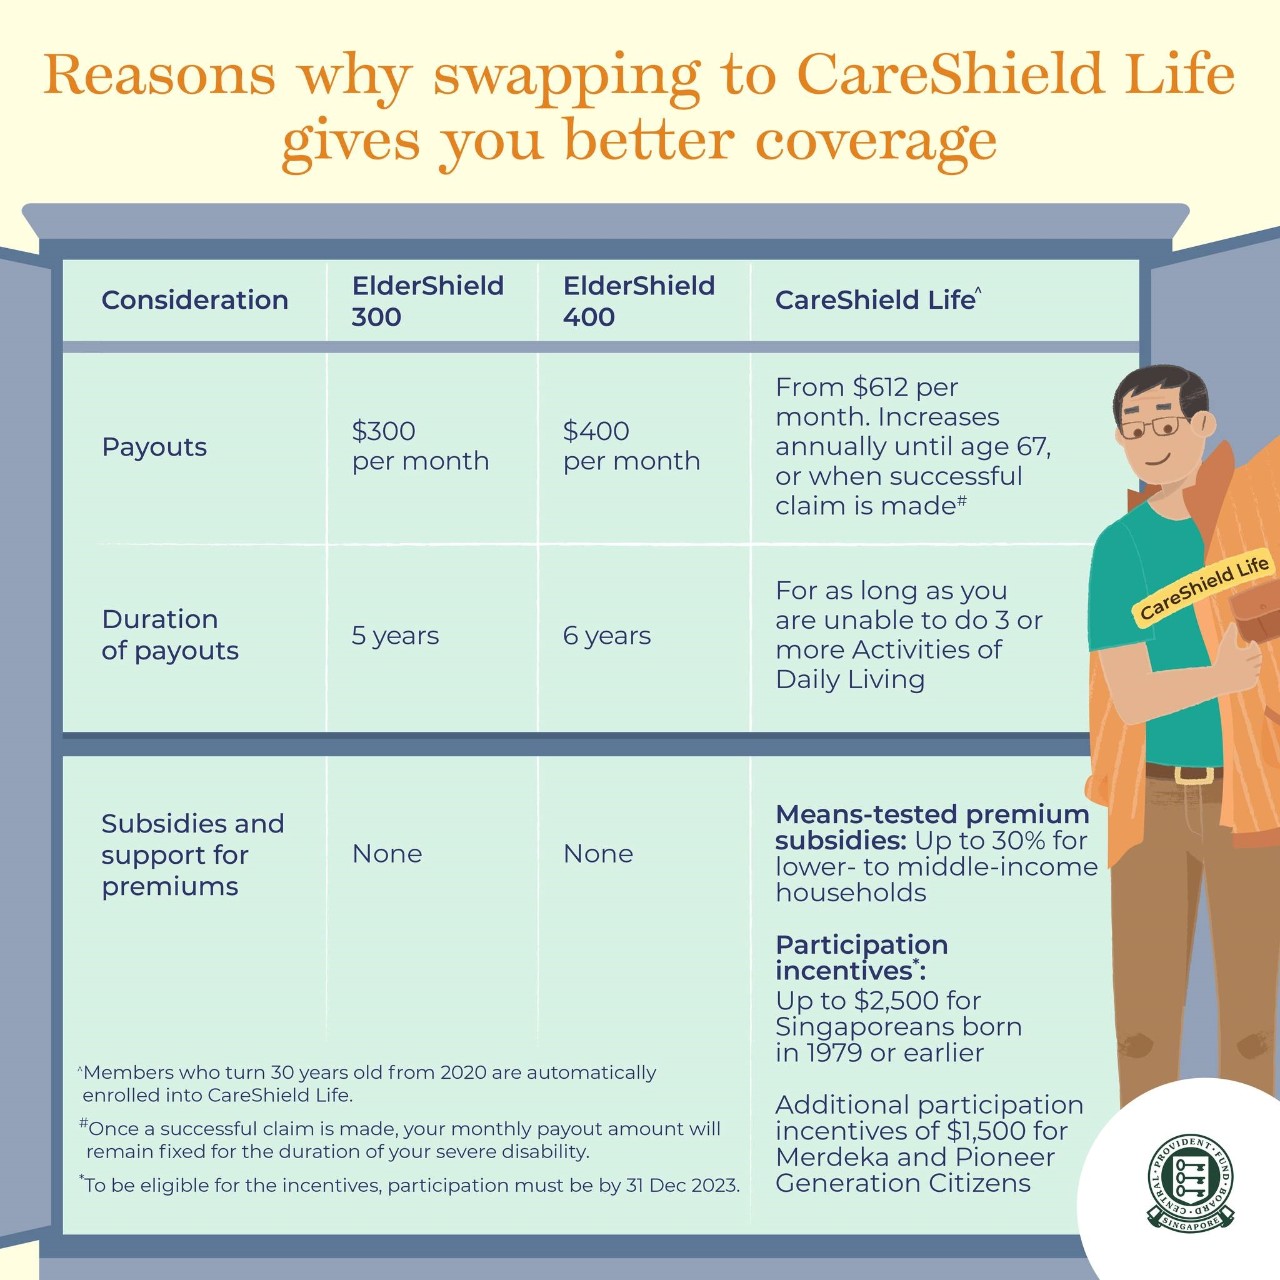 Comparison of CareShield Life vs ElderShield